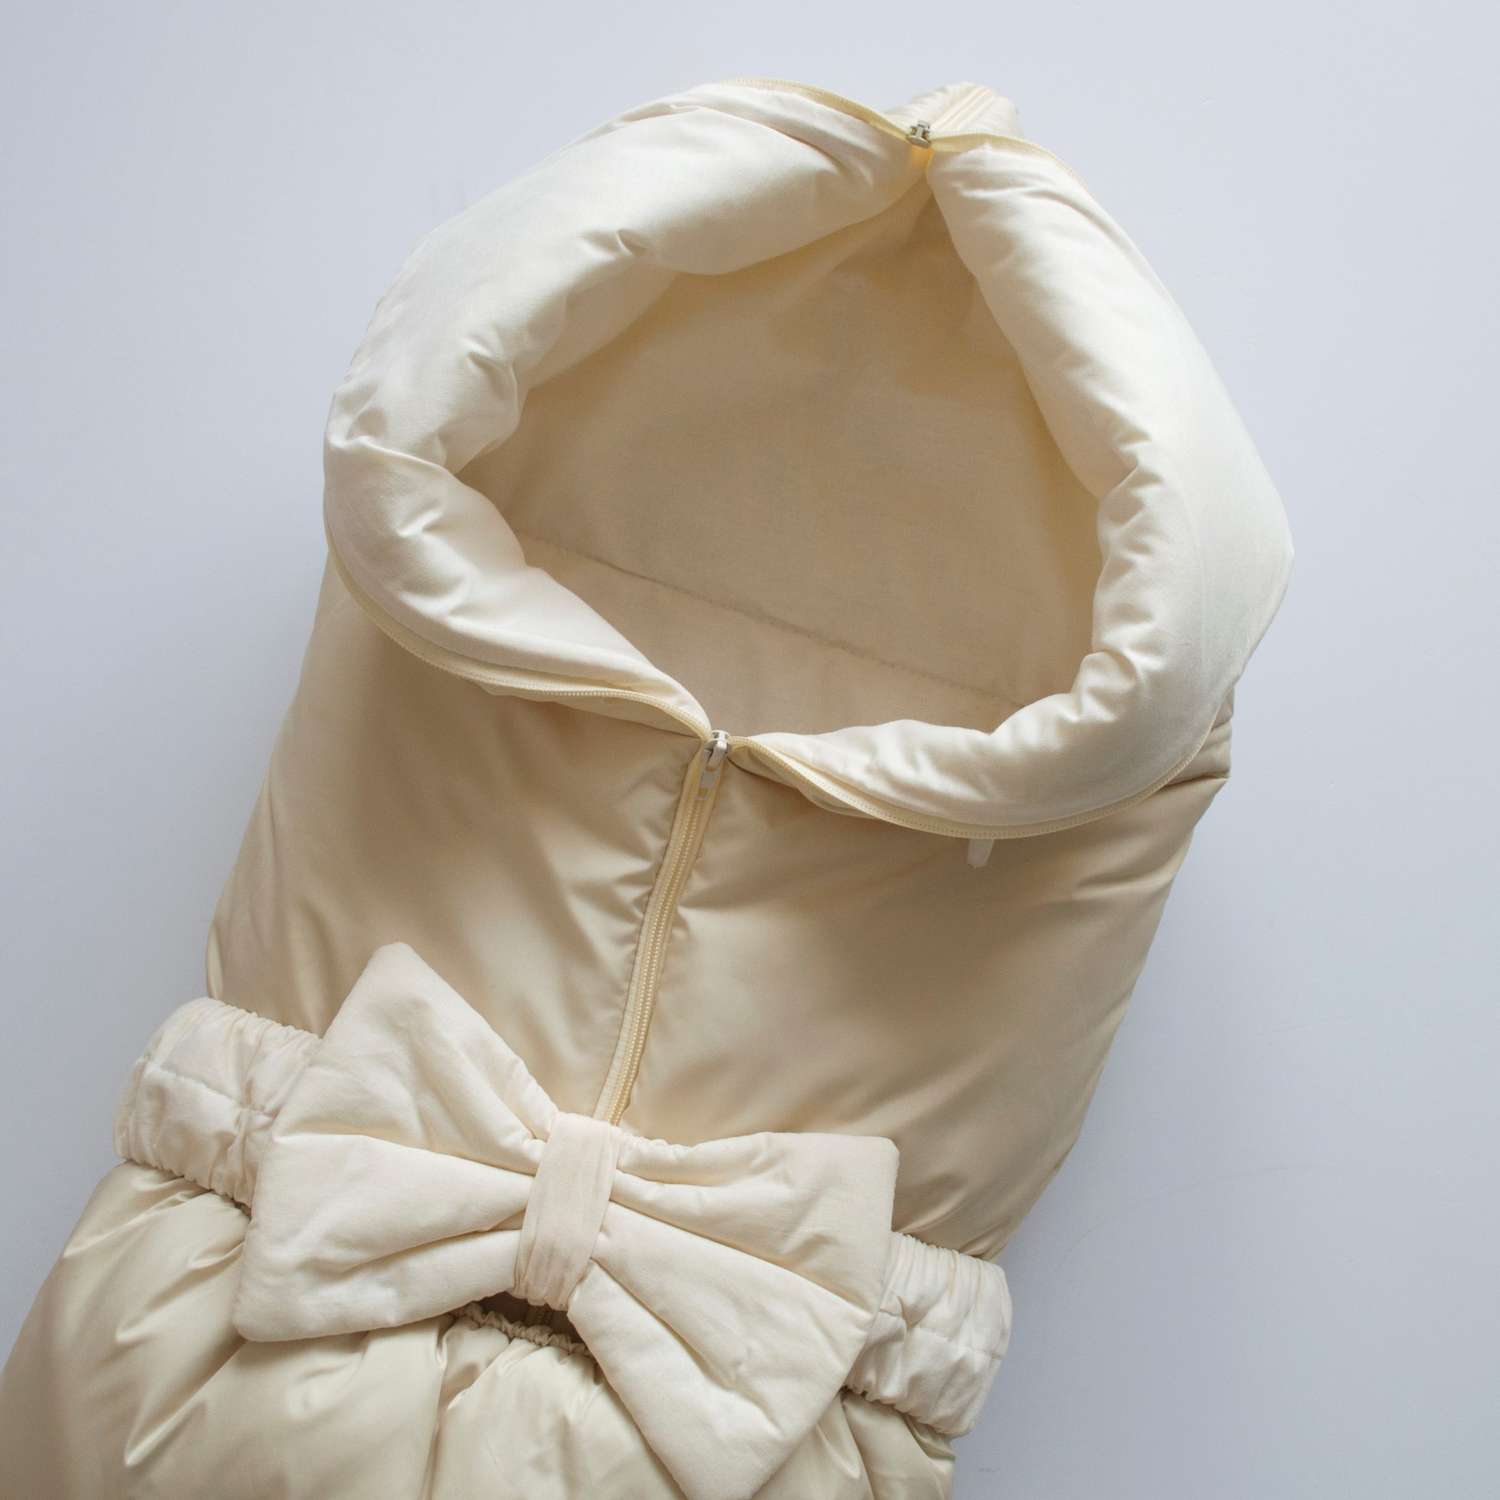 Одеяло-трансформер Clapsy Крем-брюле молочный - фото 7